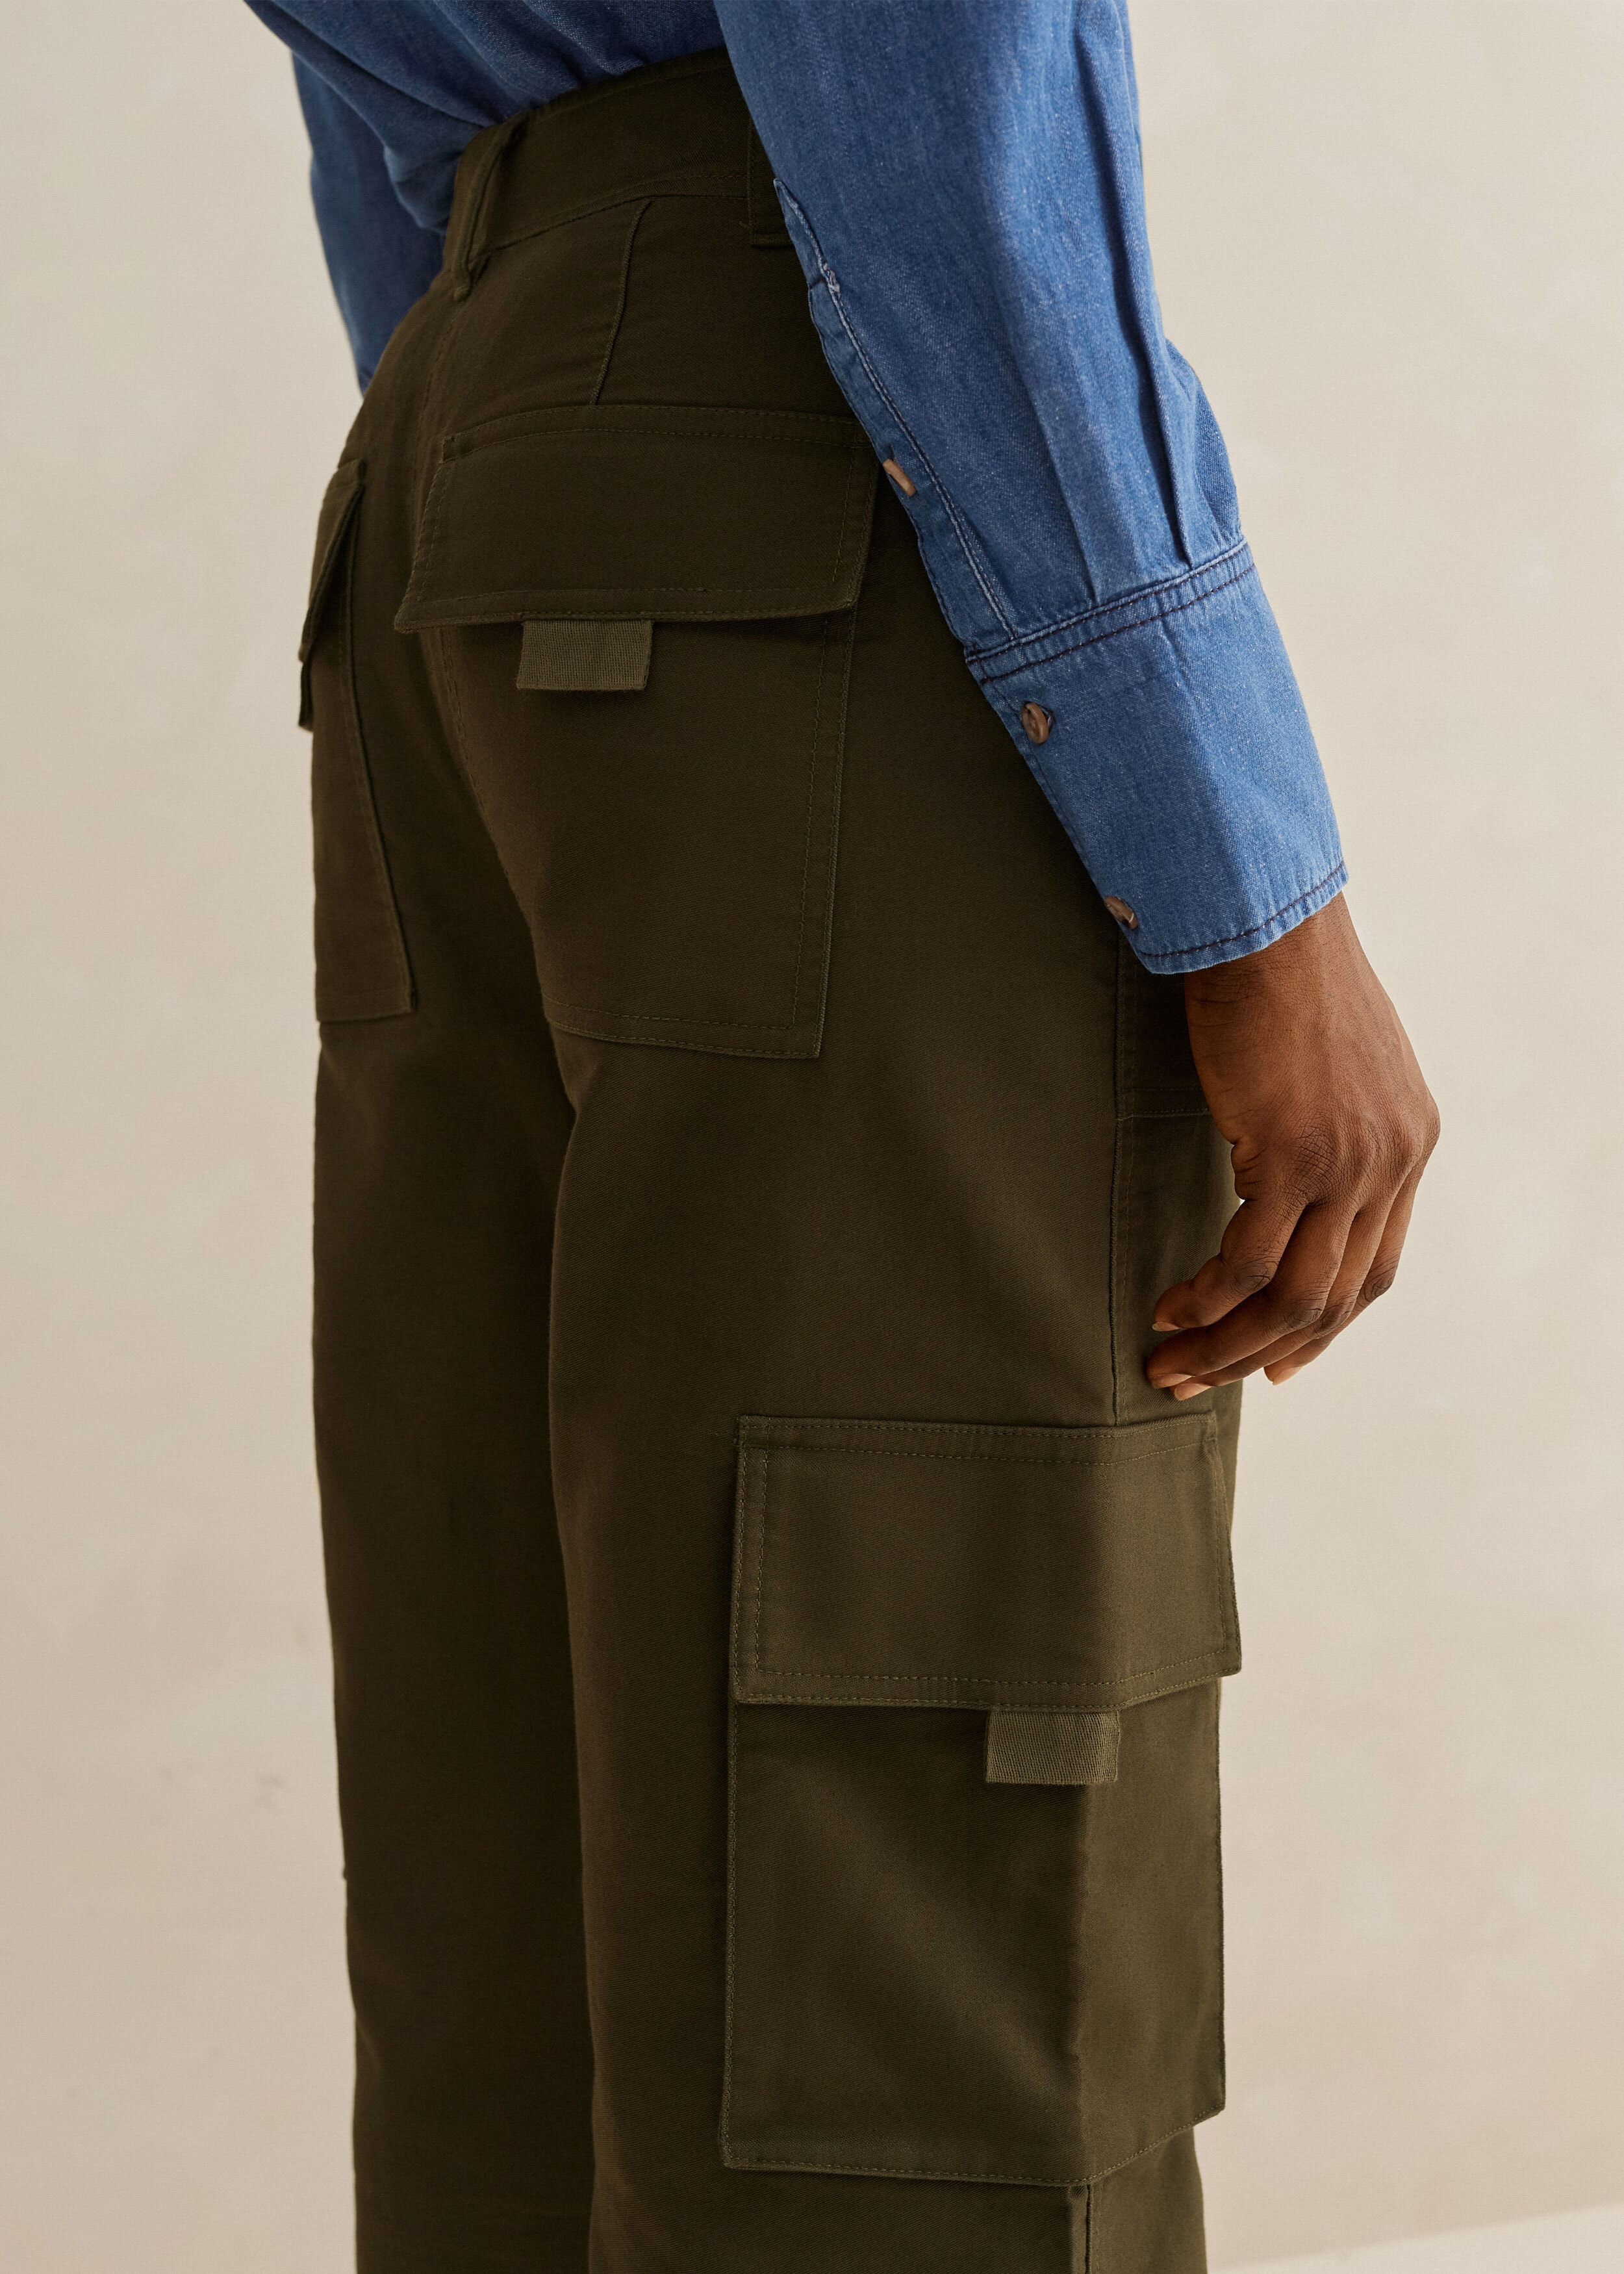 M&S GOODMOVE RANGE Skinny Cargo Trousers BNWT Size 12 Khaki Cotton